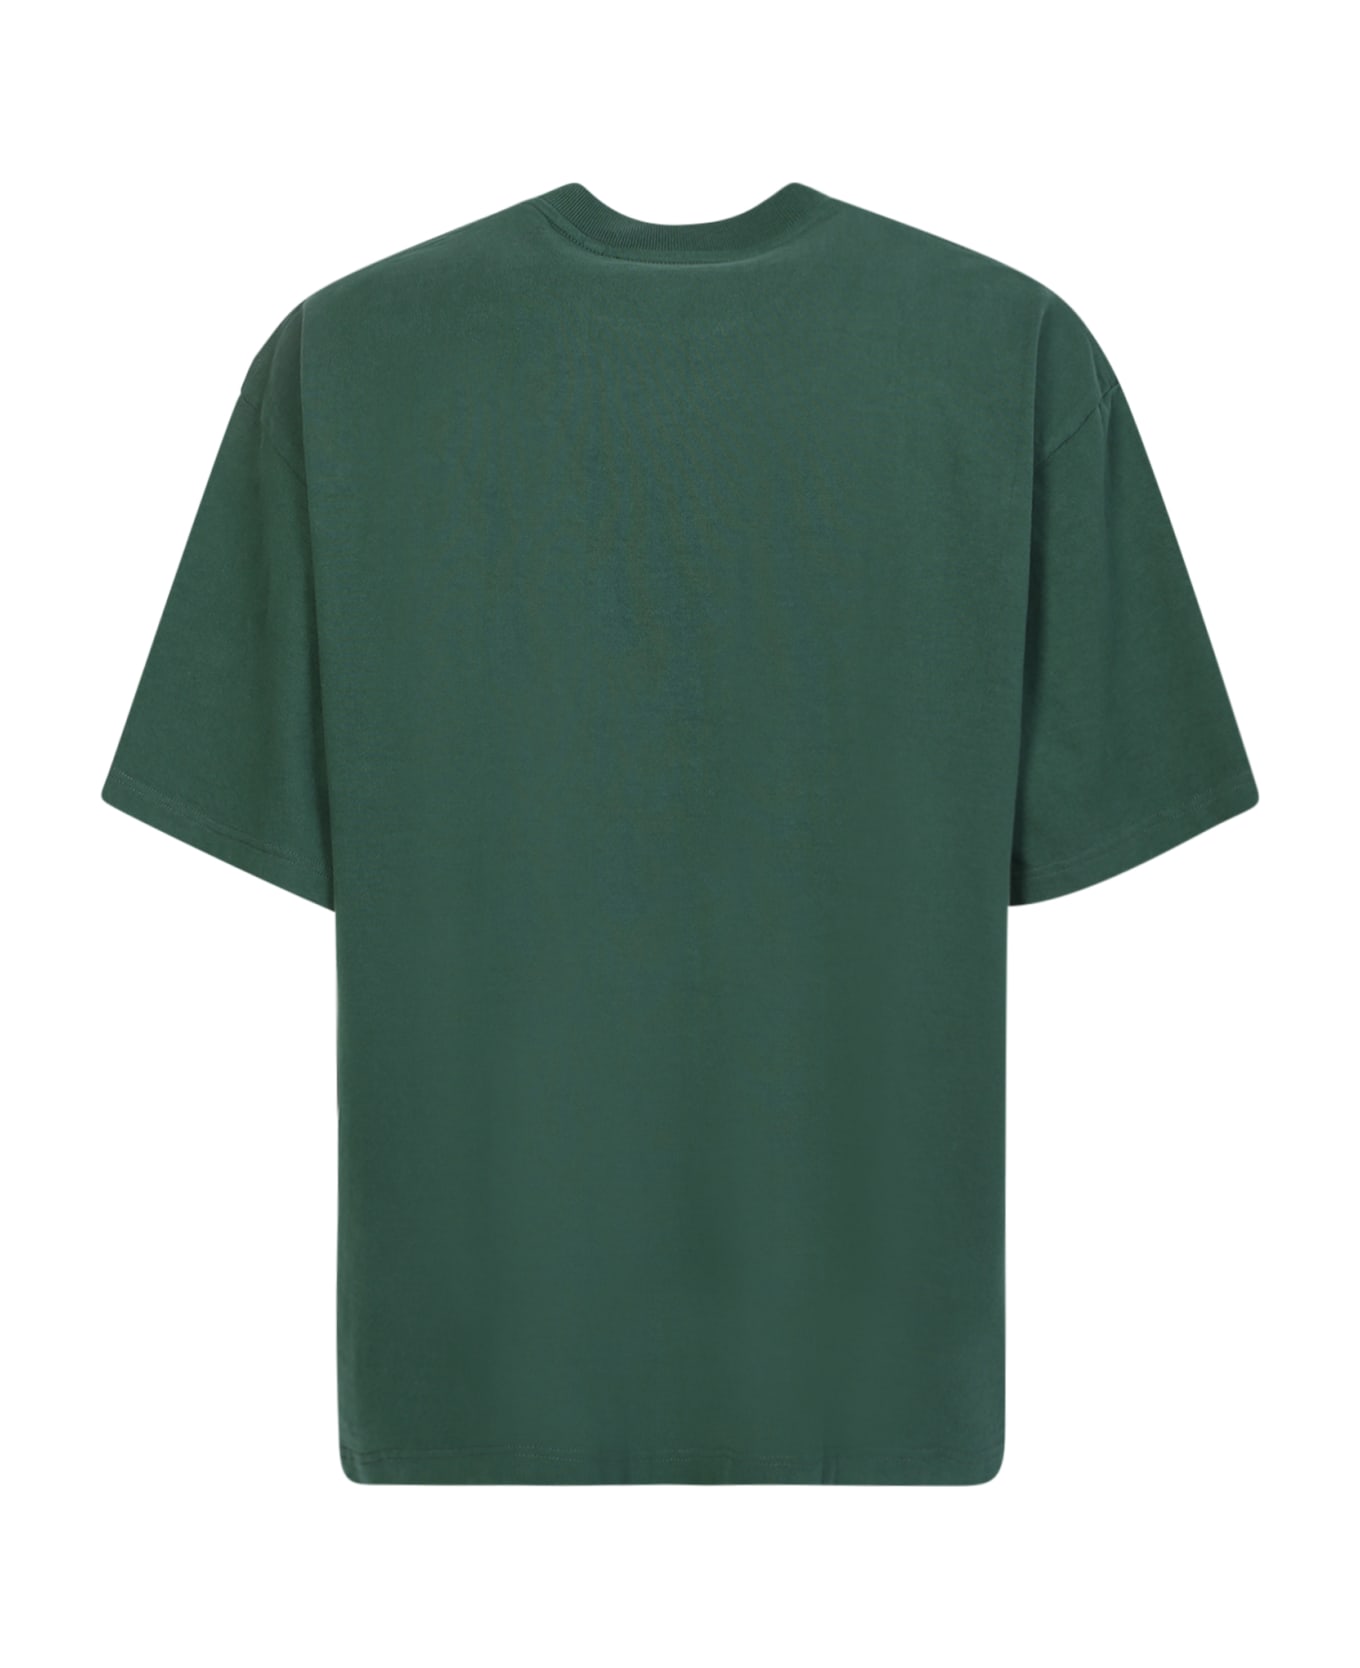 Axel Arigato College Green T-shirt - Green